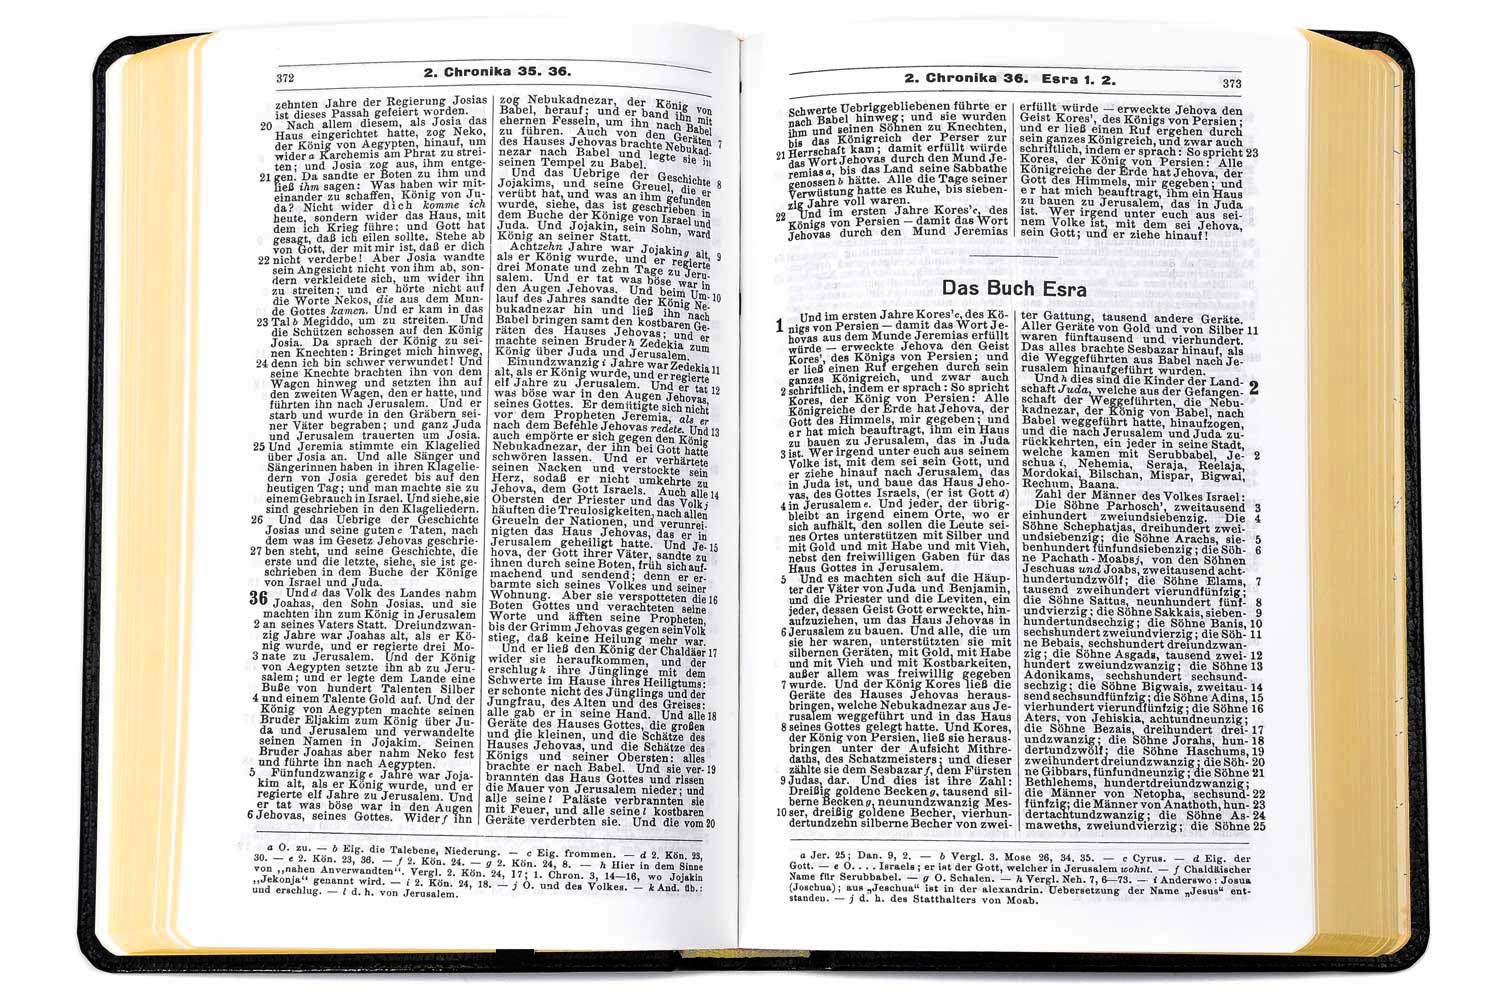 Elberfelder Bibel 1905 - Taschenausgabe (Perlbibel)